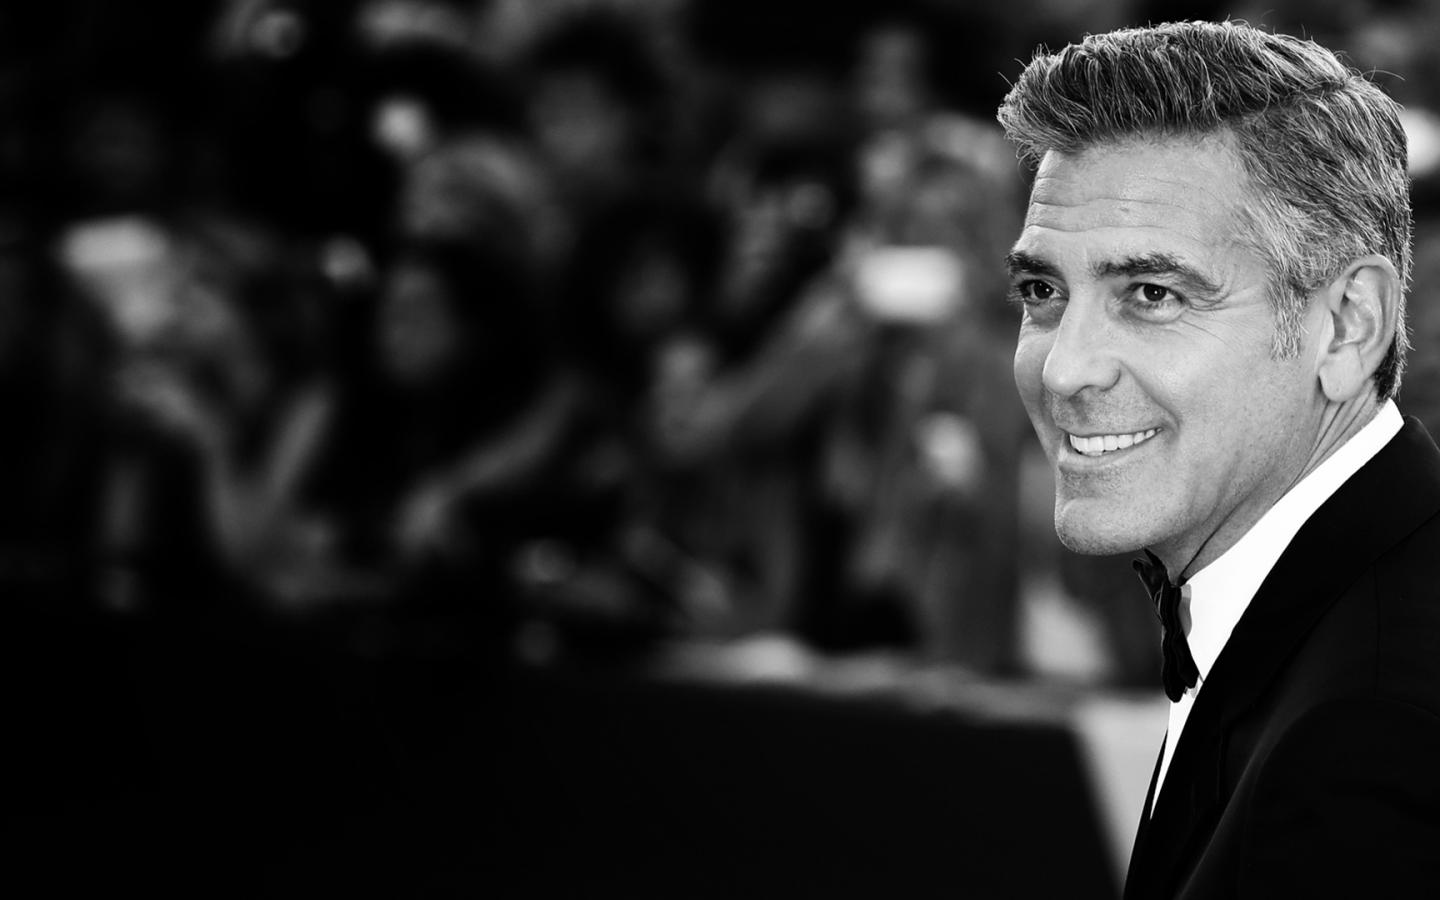 George Clooney Wallpaper X